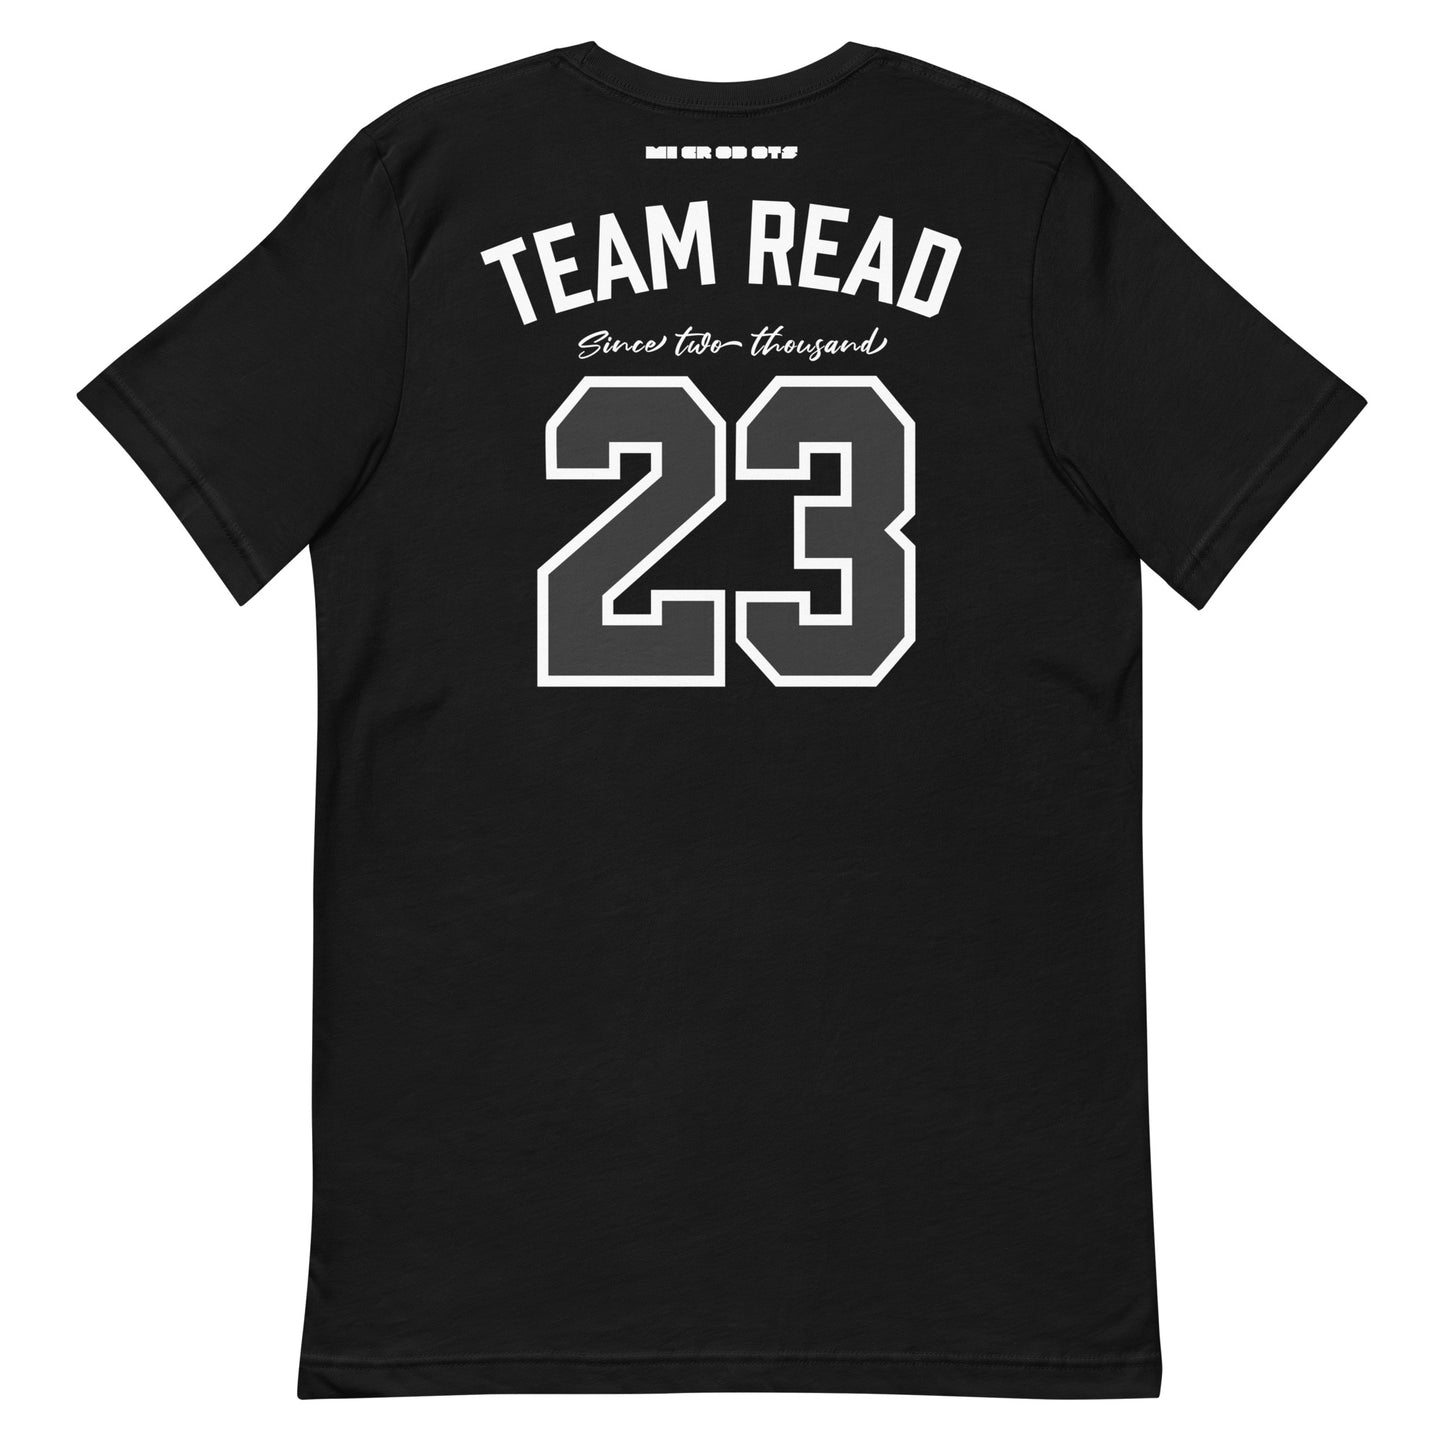 Microdots "Team Read Since 23" Design - Unisex t-shirt